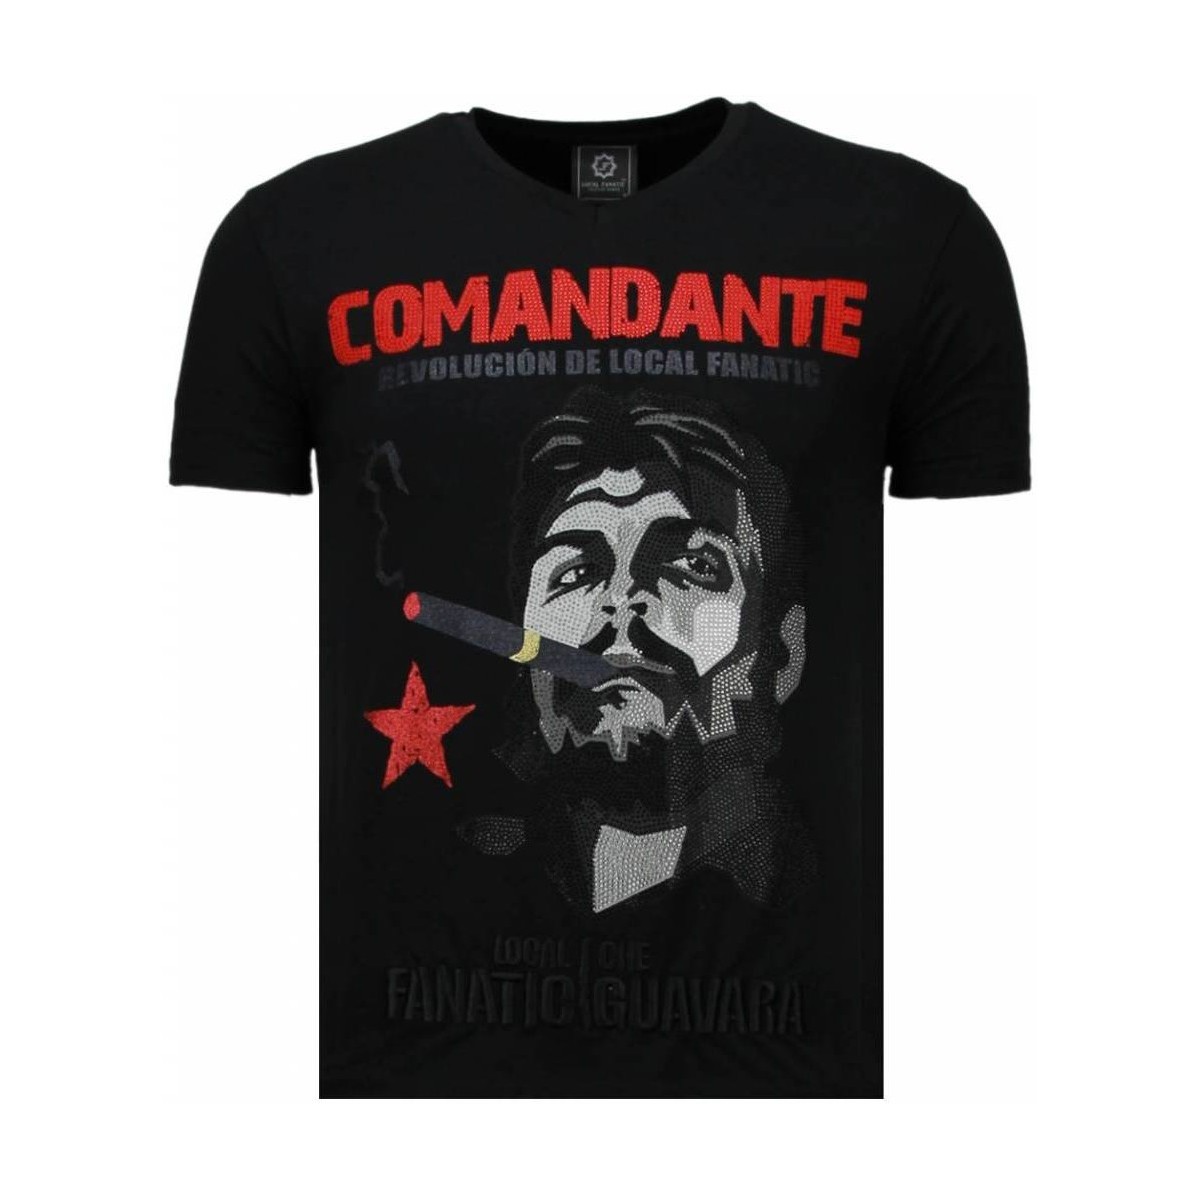 textil Herr T-shirts Local Fanatic Che Guevara Codante Rhinestone Svart